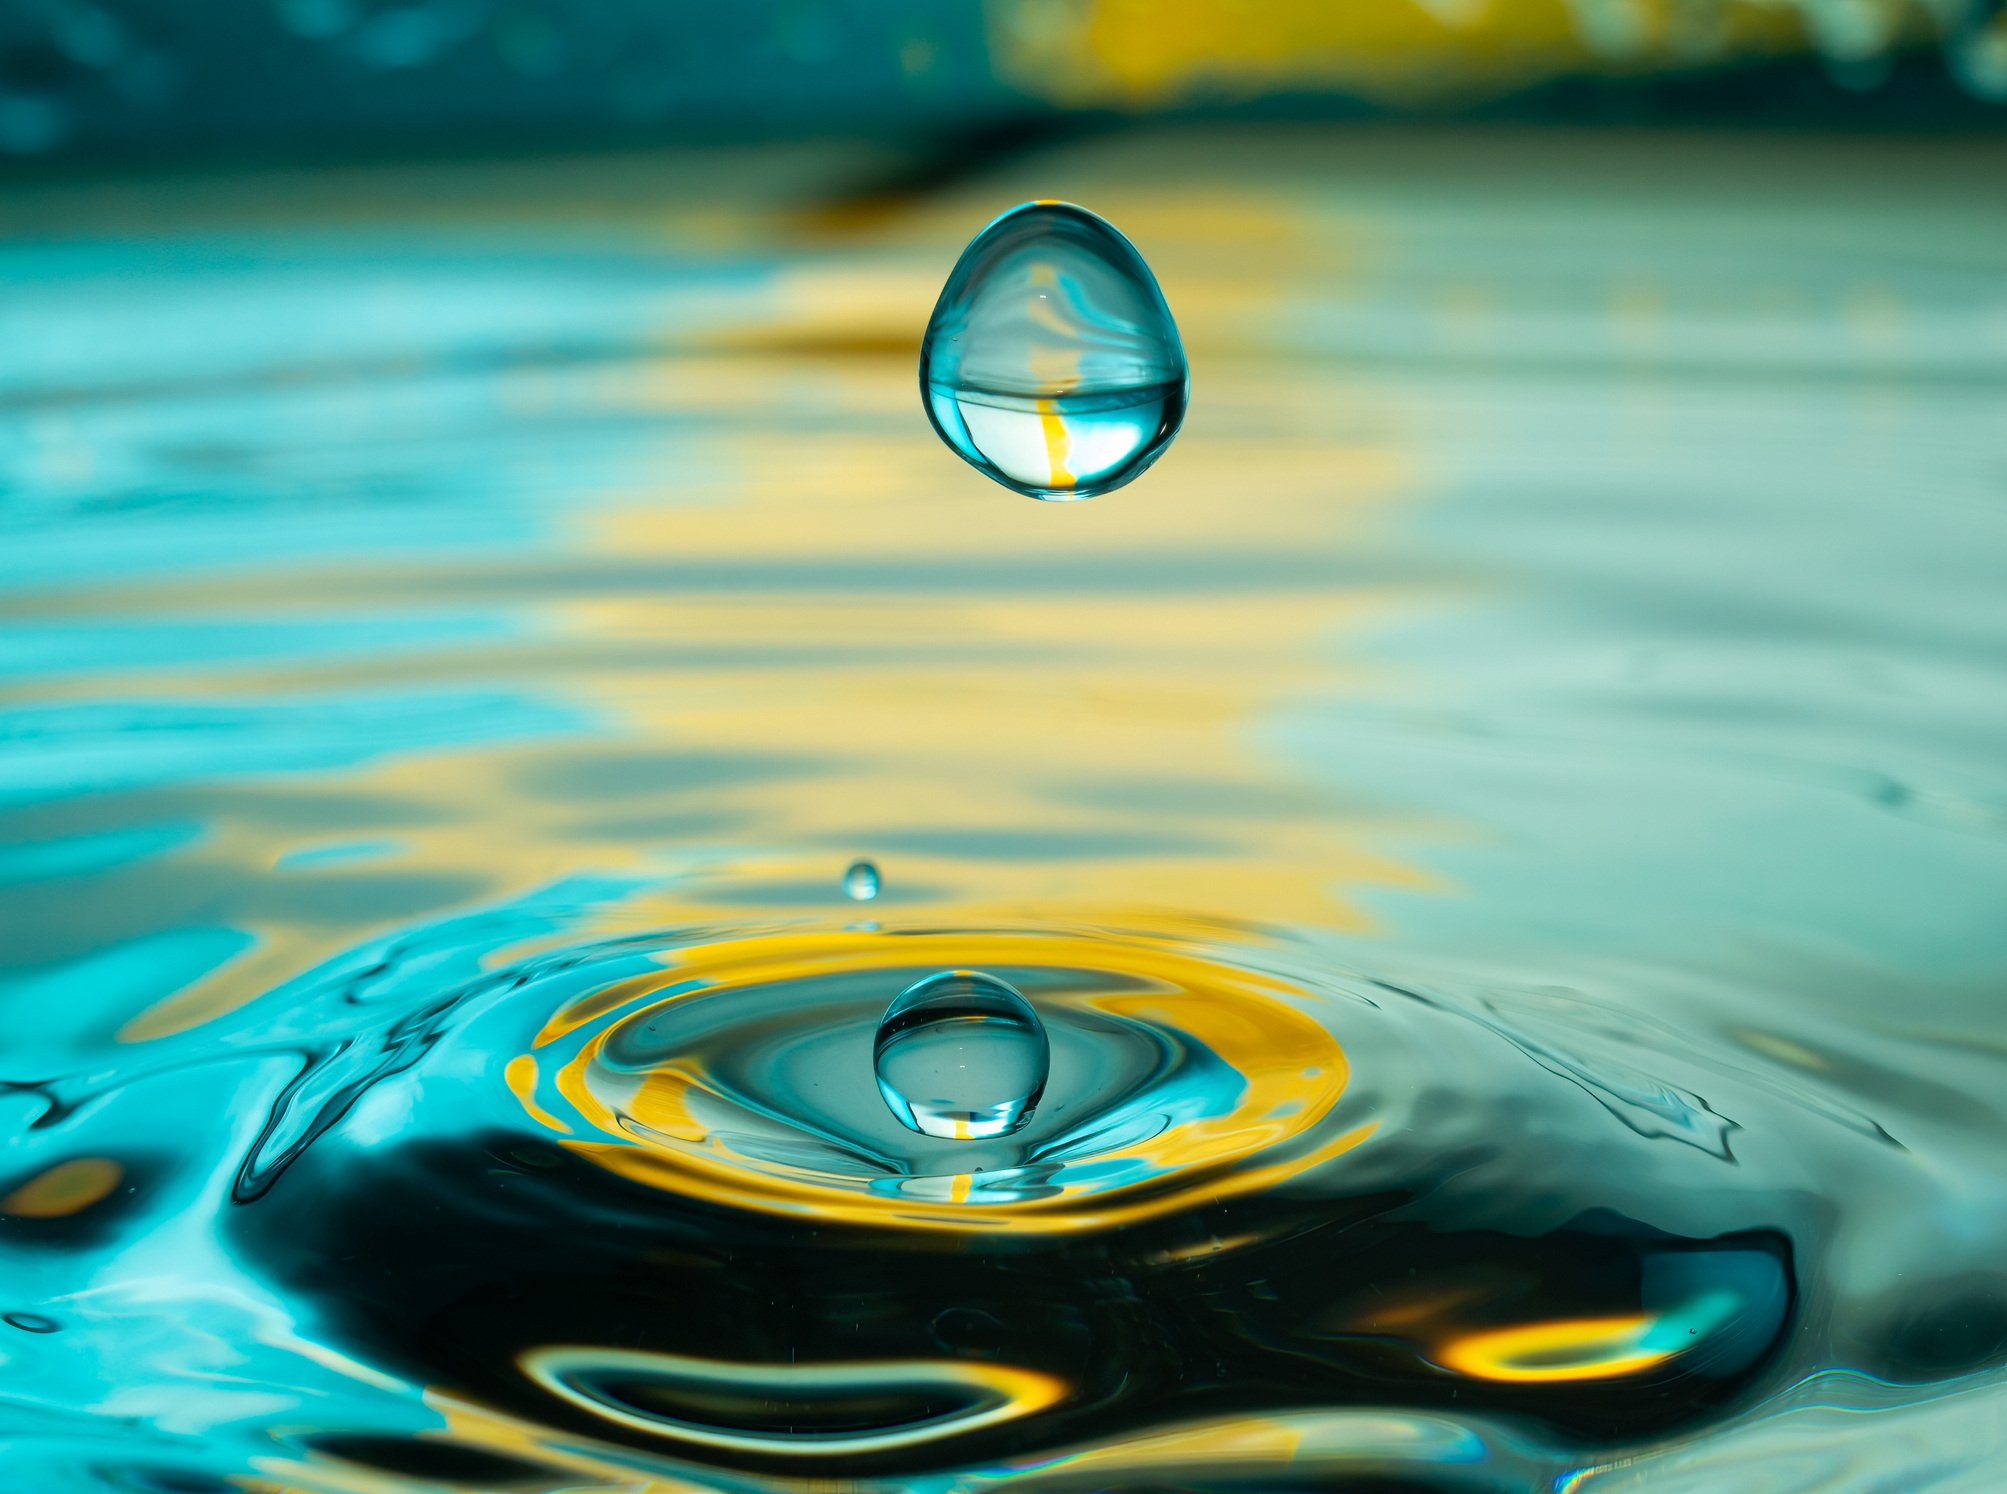  water droplet splash